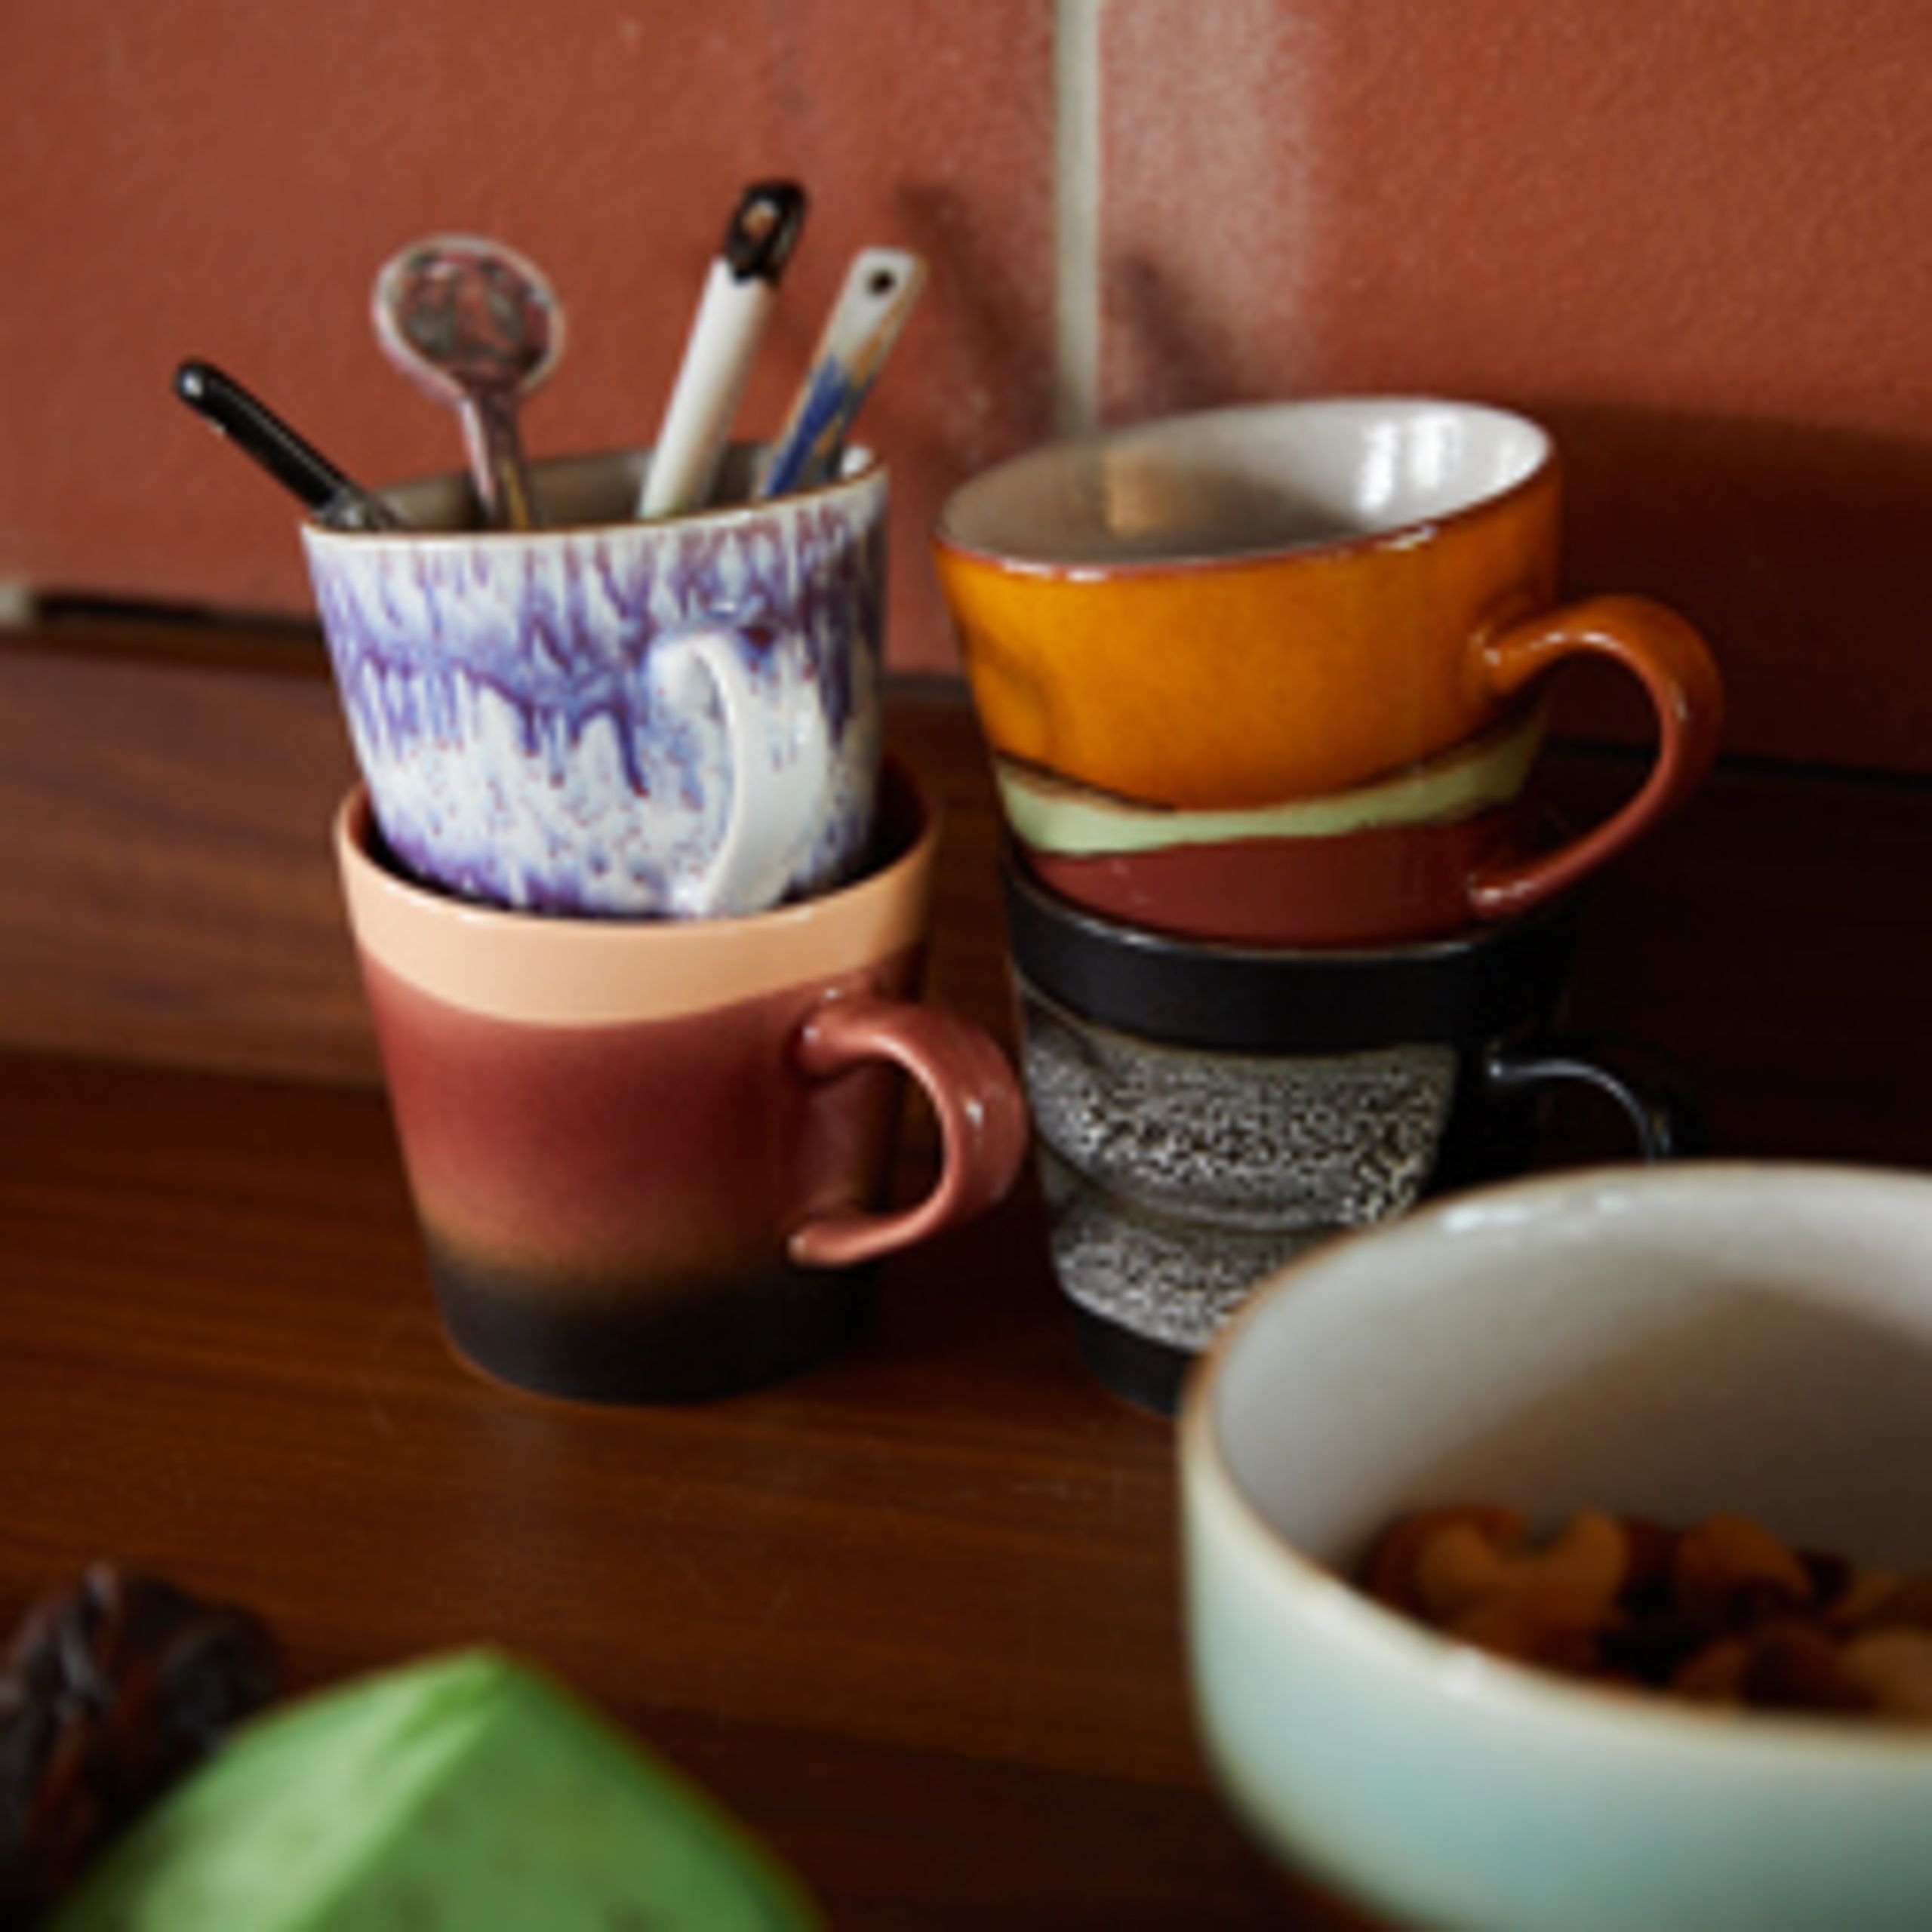 HKliving - Set of 4 70s Ceramics Americano Mugs